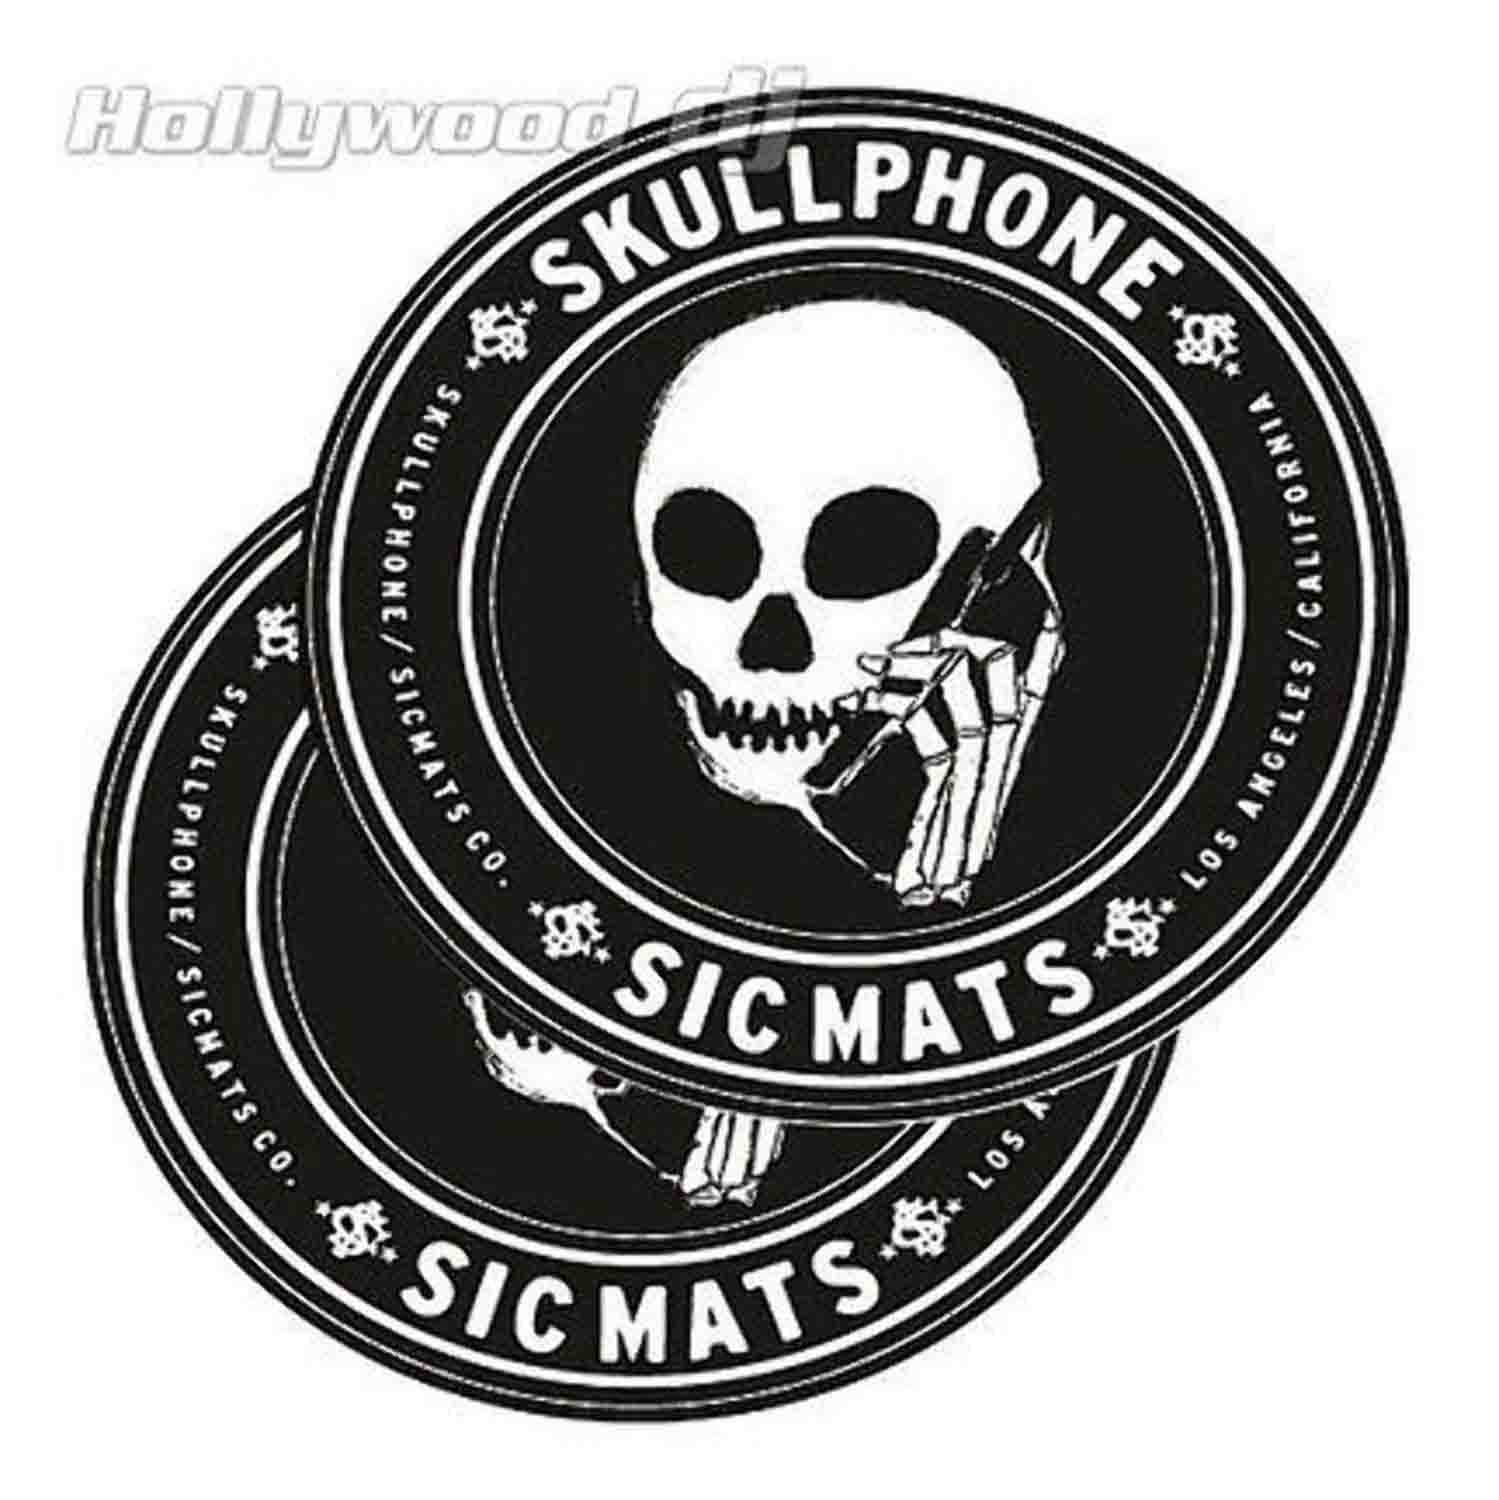 Sicmats Skullphone Turntable Slipmats - Pair - Hollywood DJ